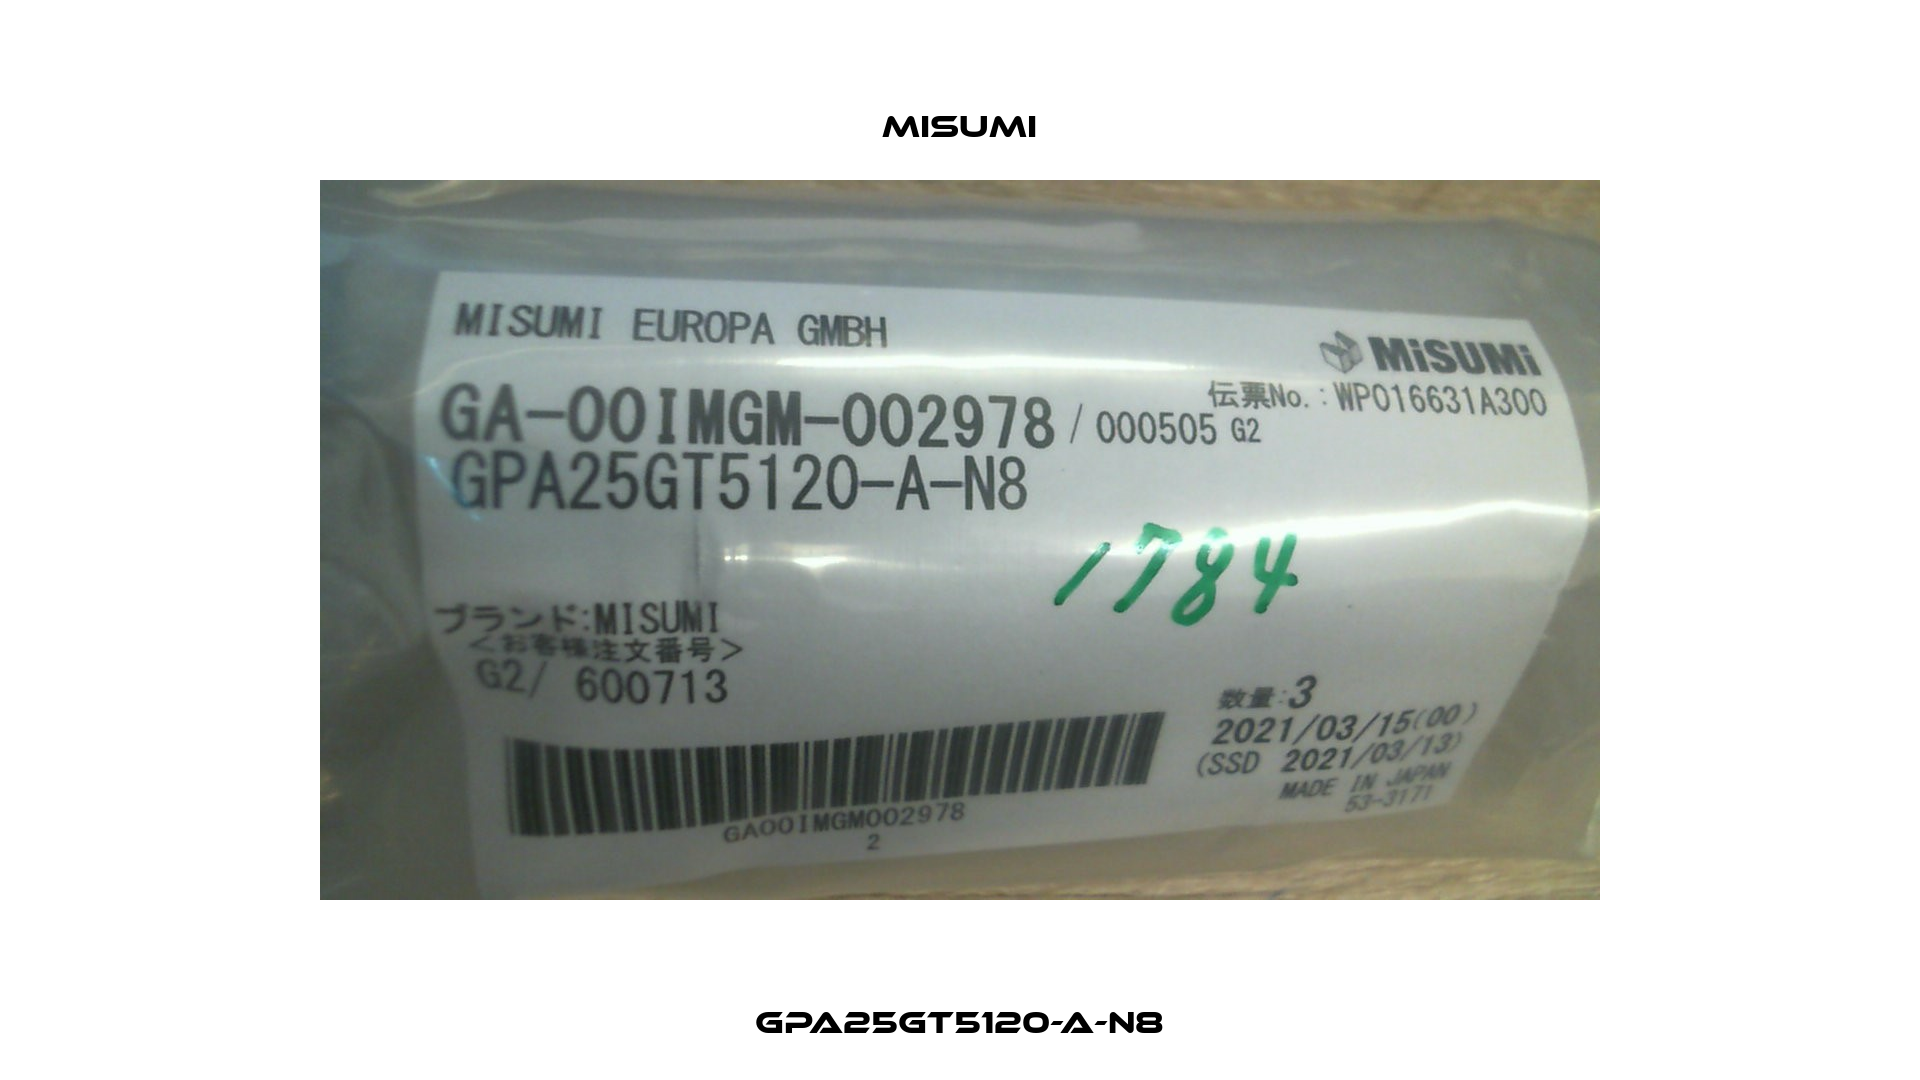 GPA25GT5120-A-N8 Misumi